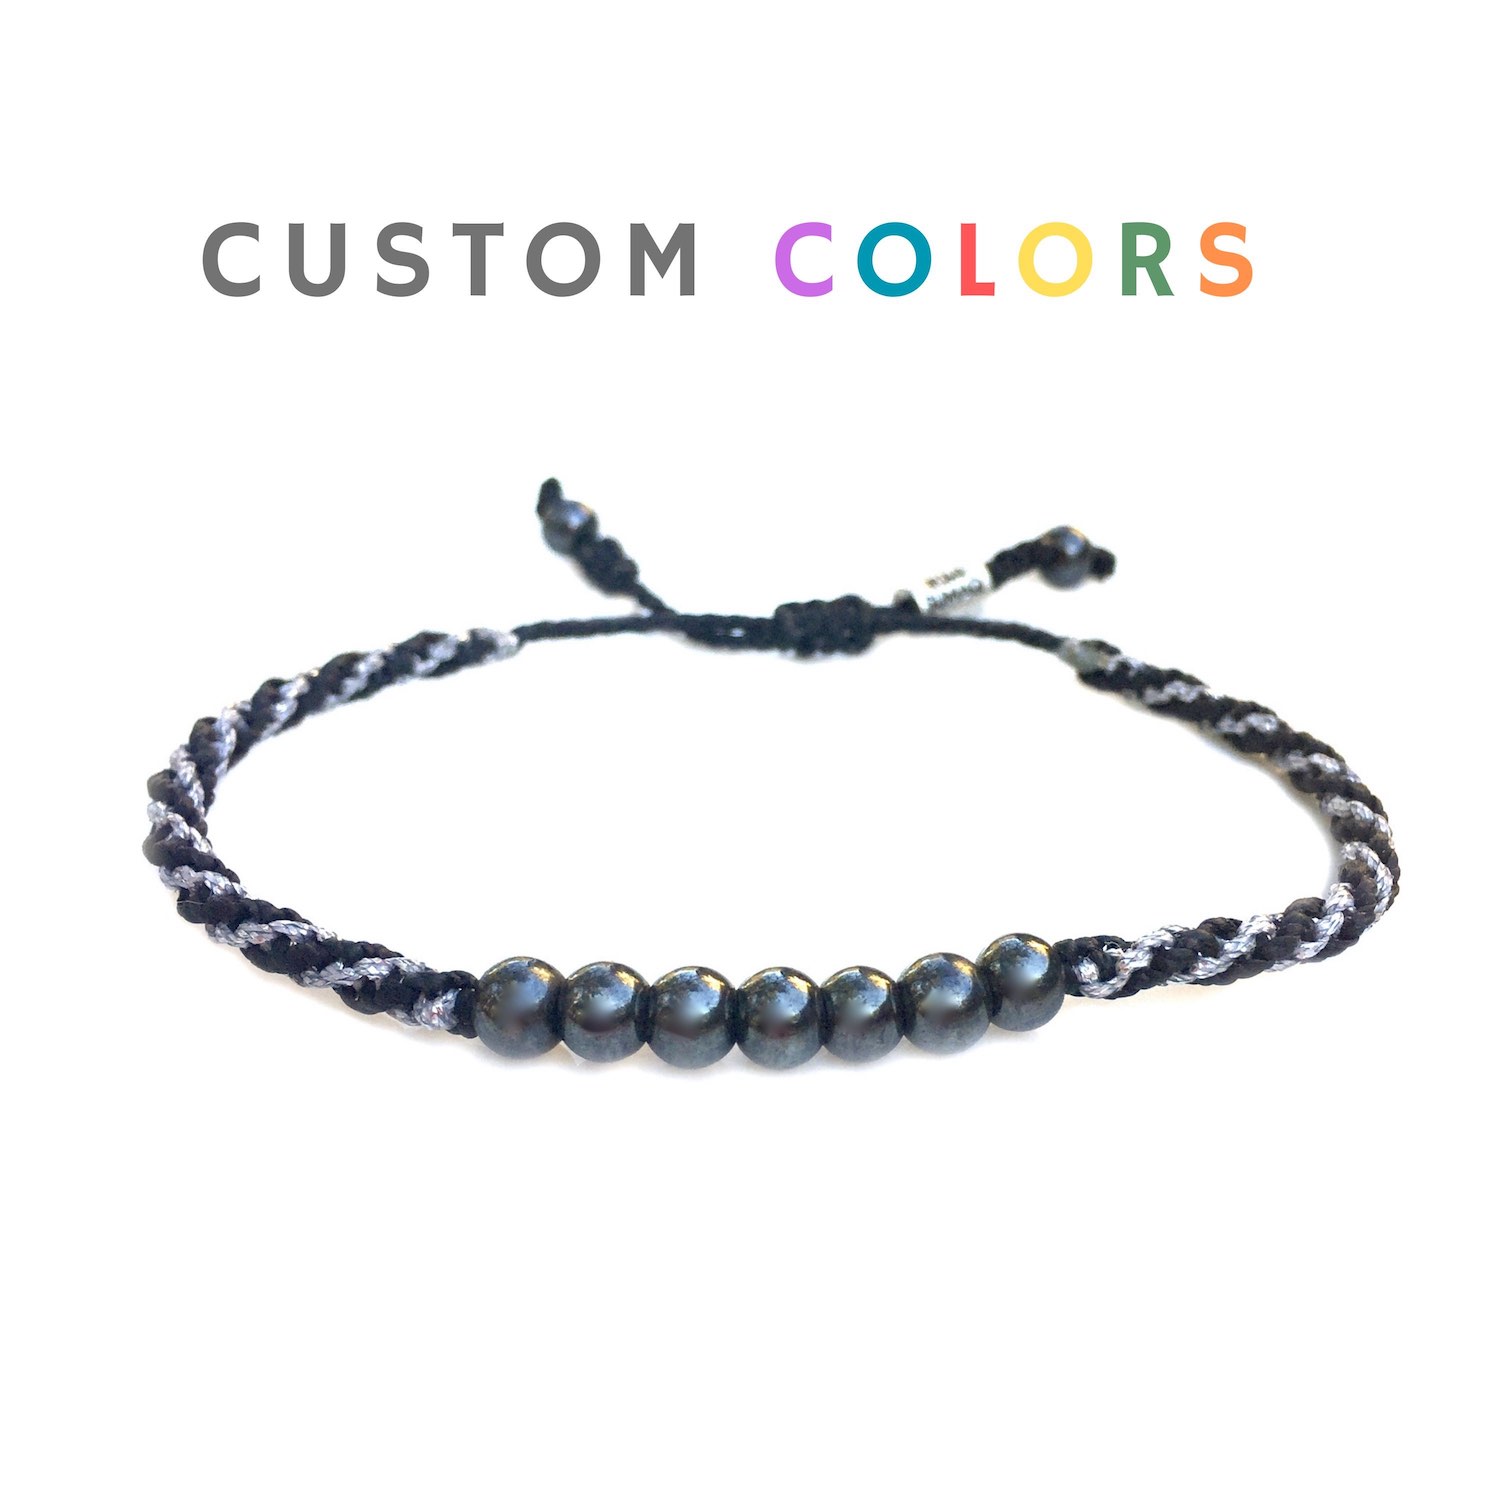 Featured image for “Custom Hematite Rope Bracelet”